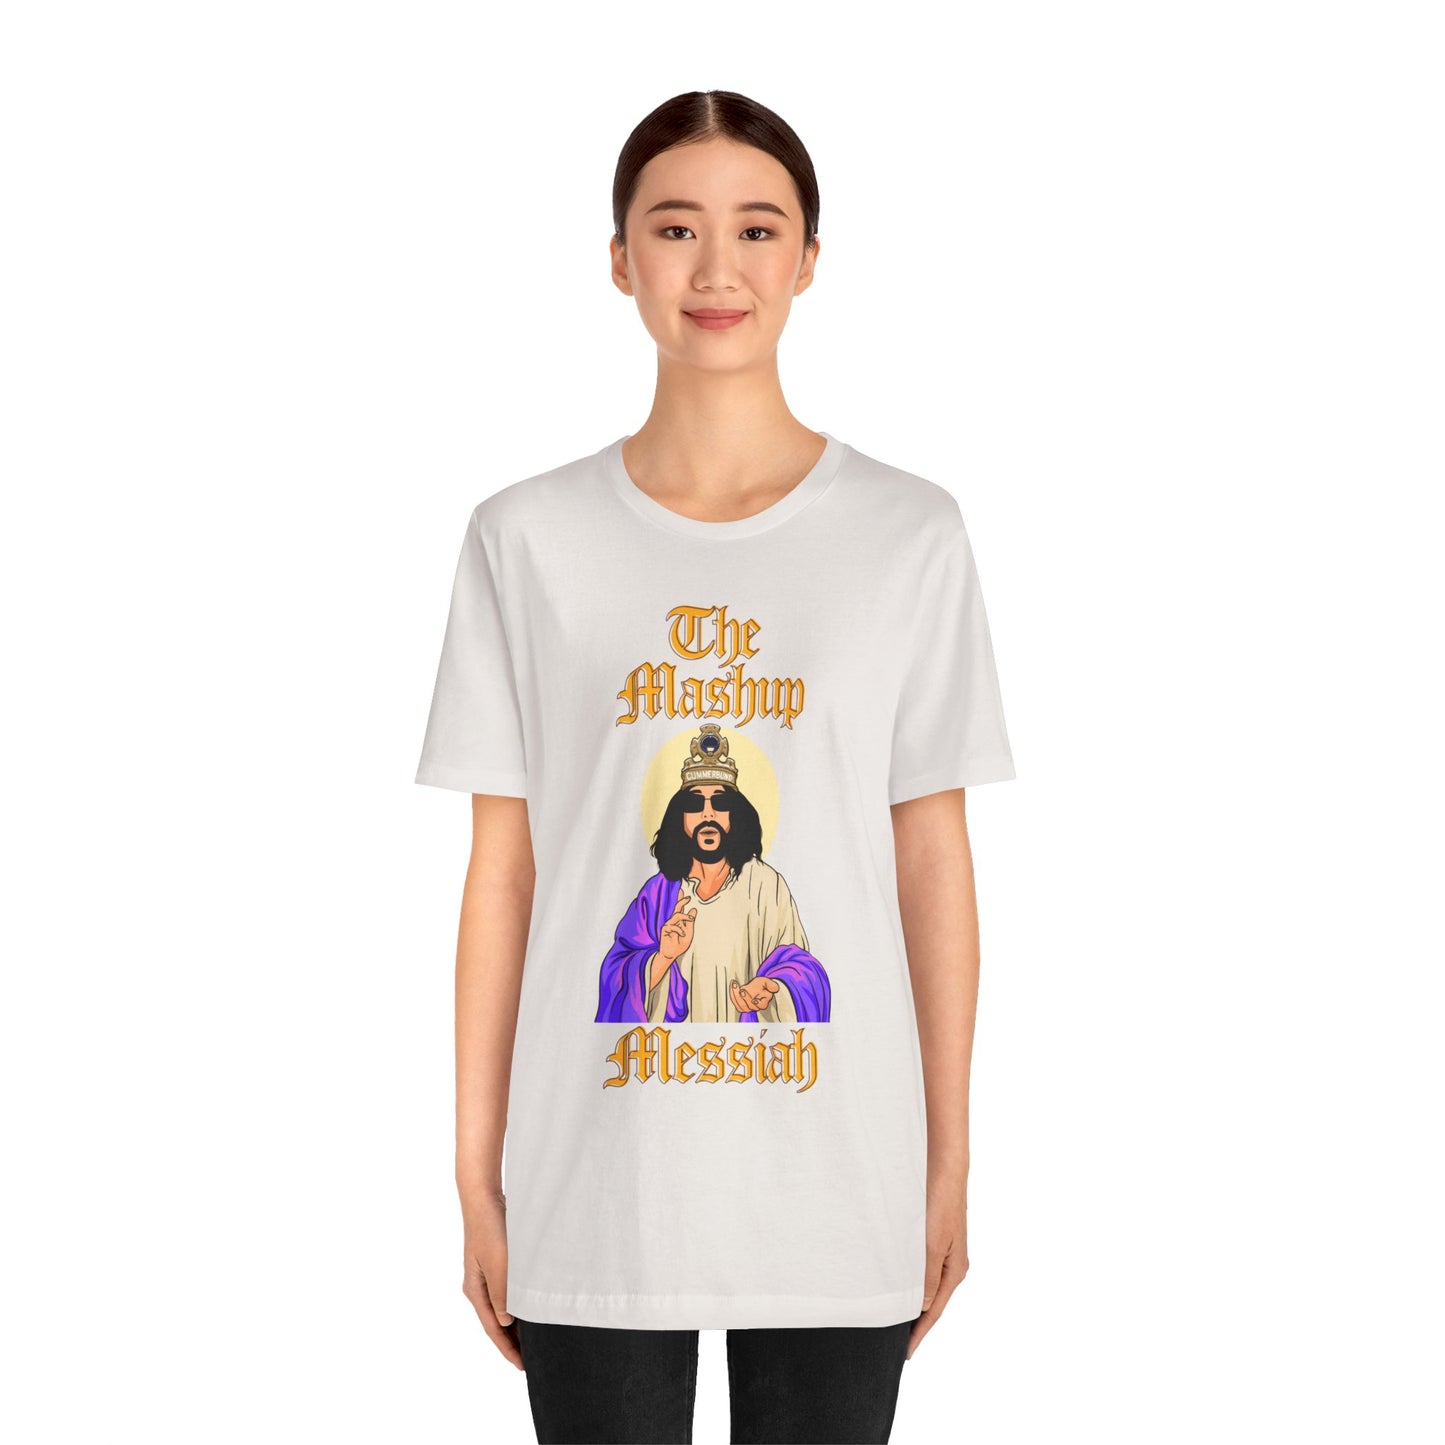 The Mashup Messiah T-Shirt